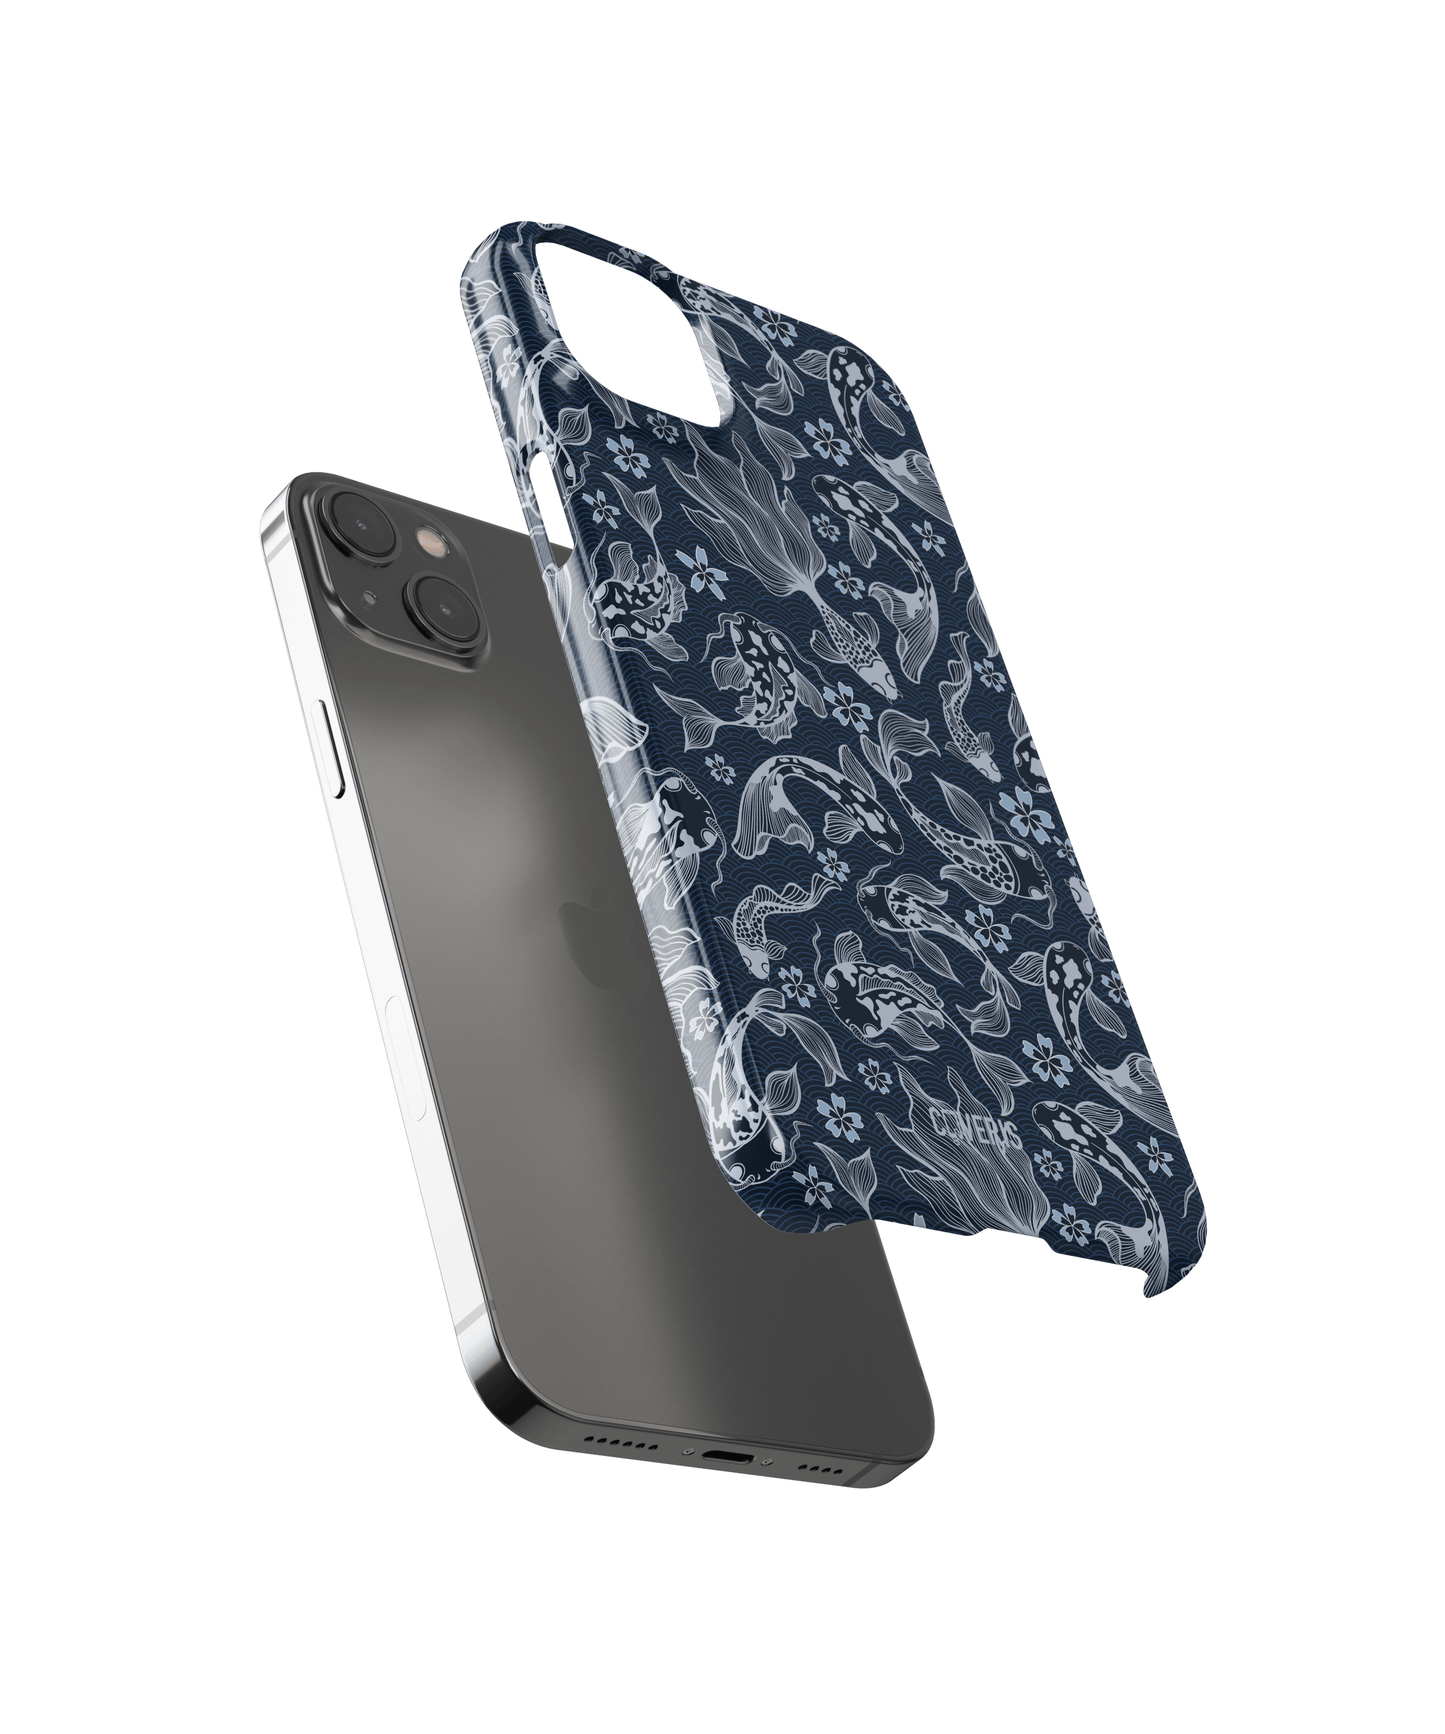 Fishtopia - Samsung Galaxy S9 Plus phone case